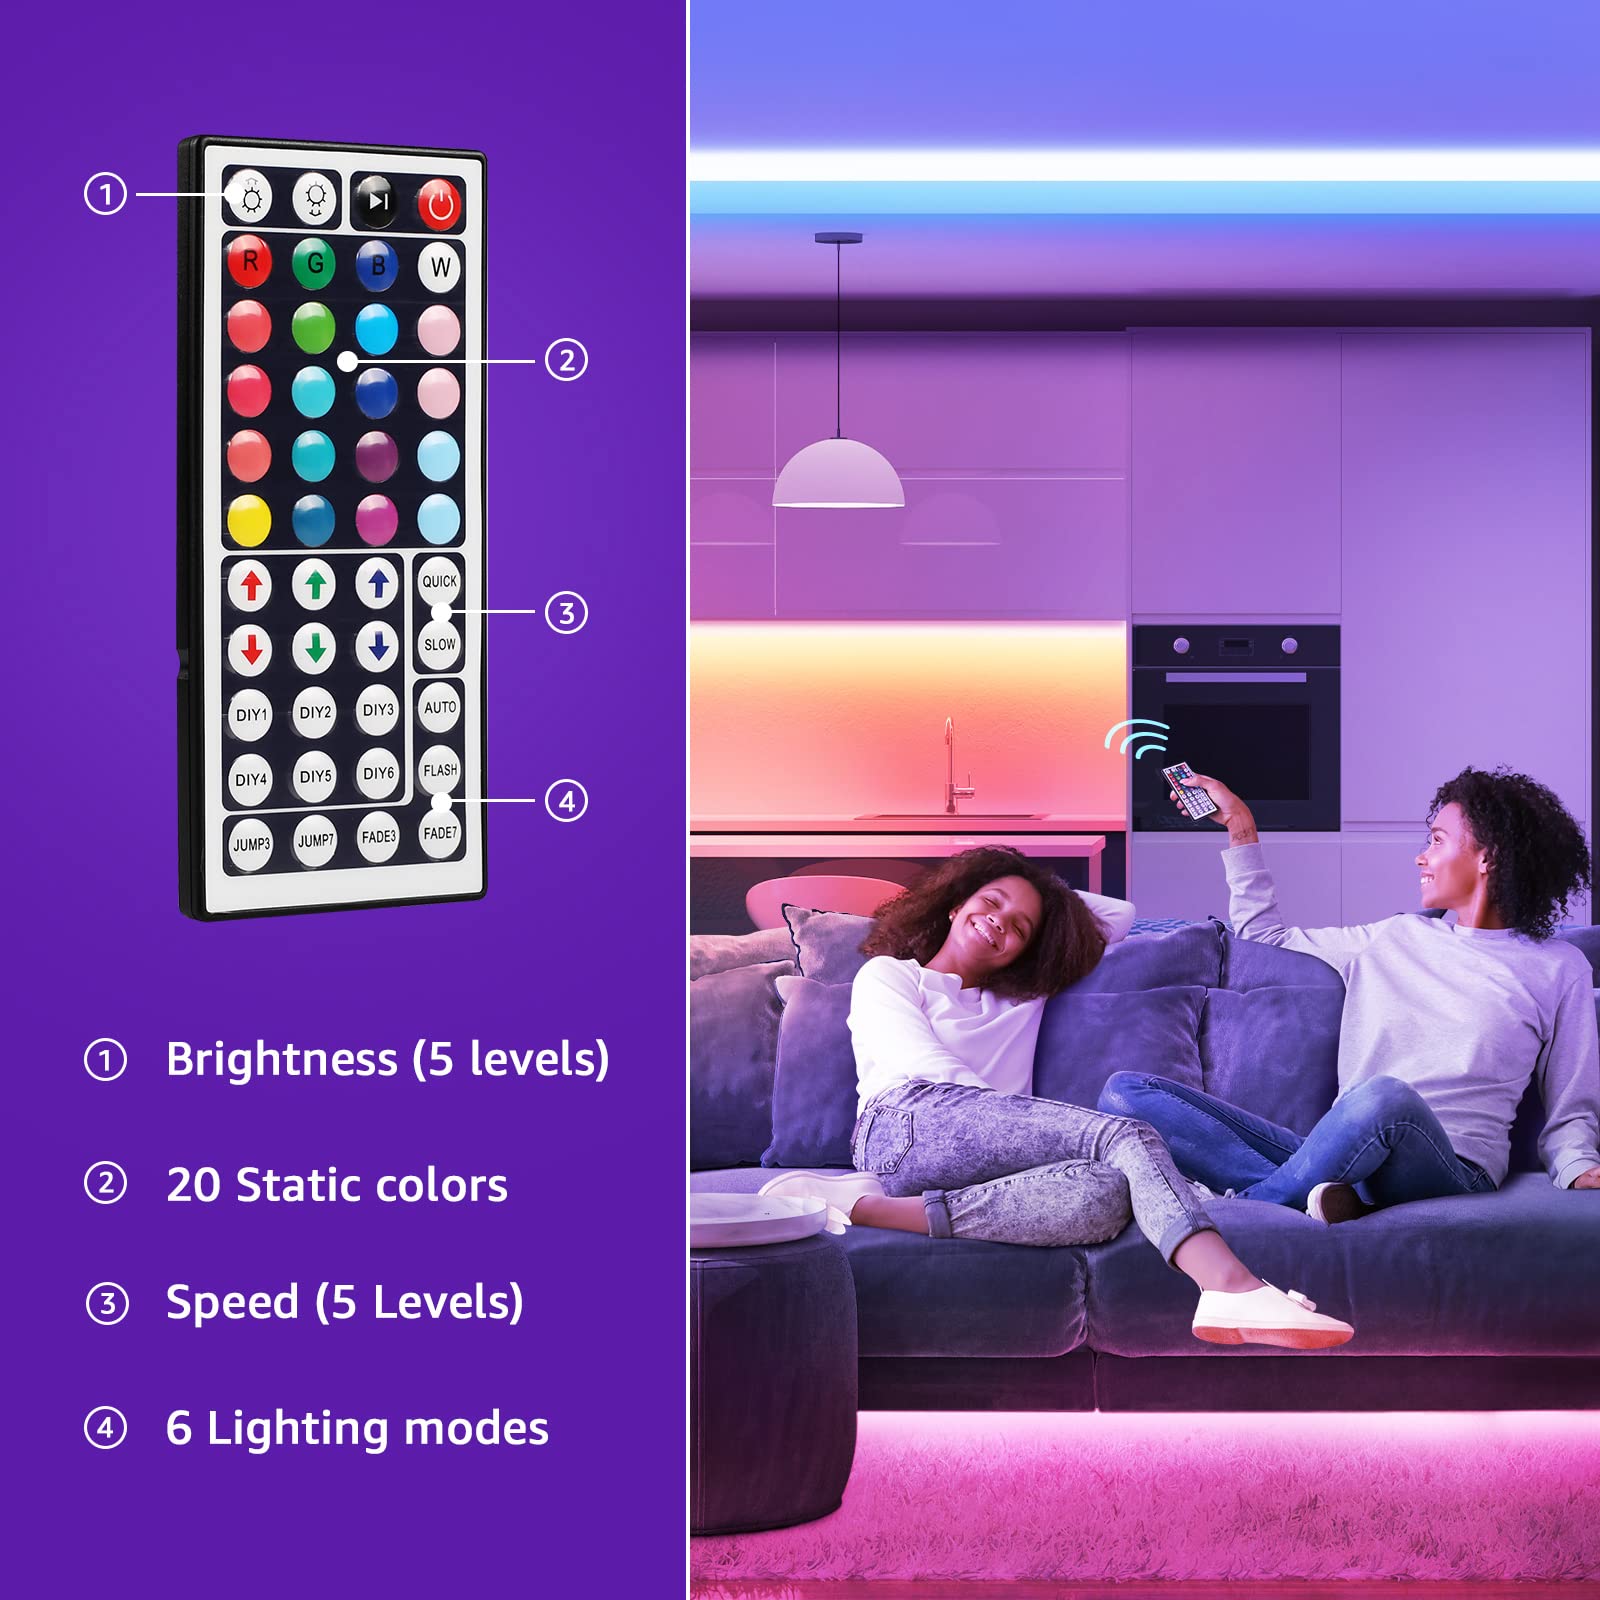 LED Strip for Room Decoration TV Backlight Bluetooth Remote LED 1m 2m 3m 4m 5m RGB Tape LED Strip Light 5050 Color for Christmas